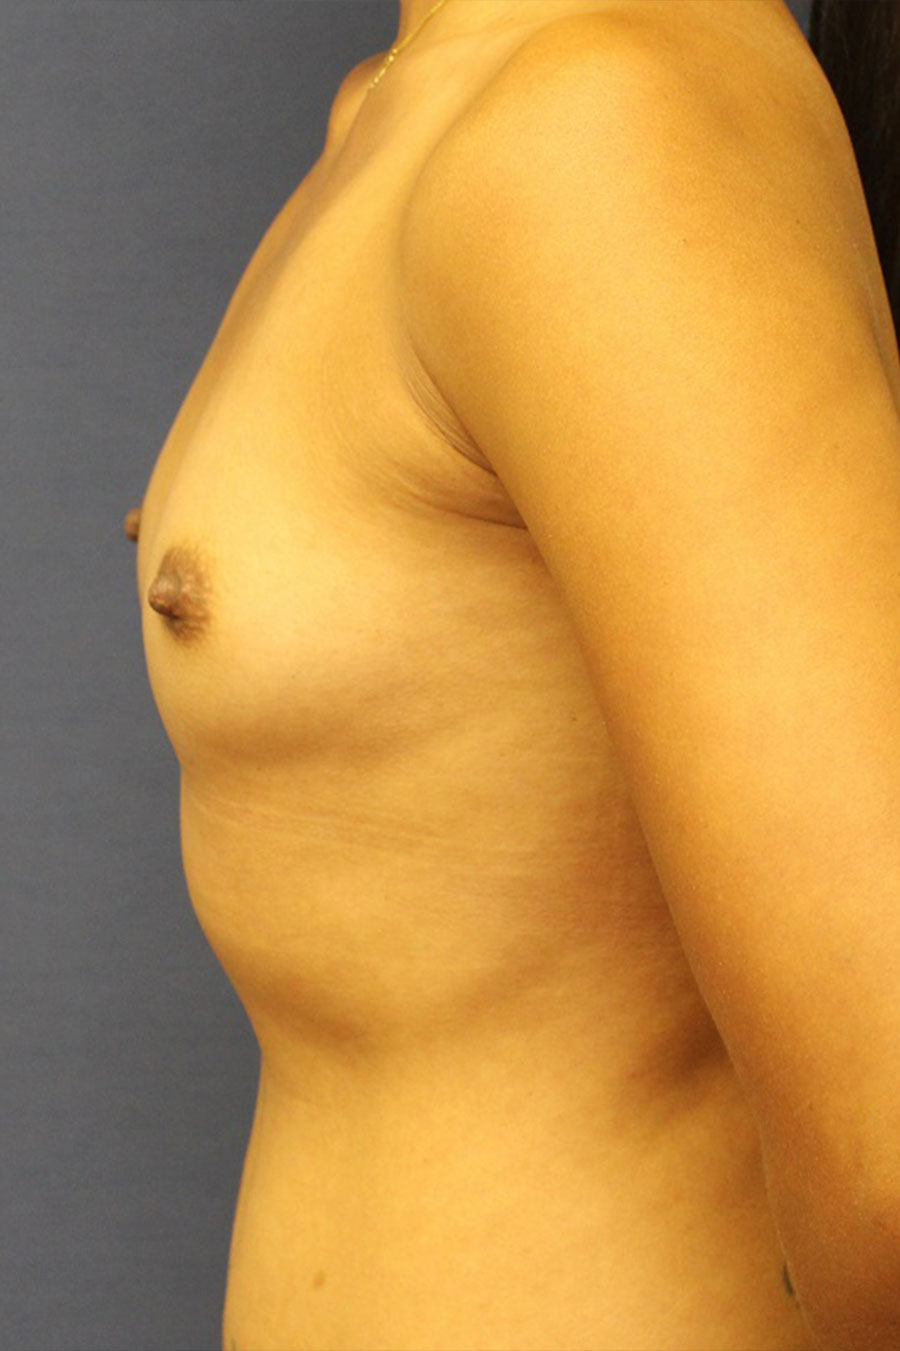  Breast Augmentation Female